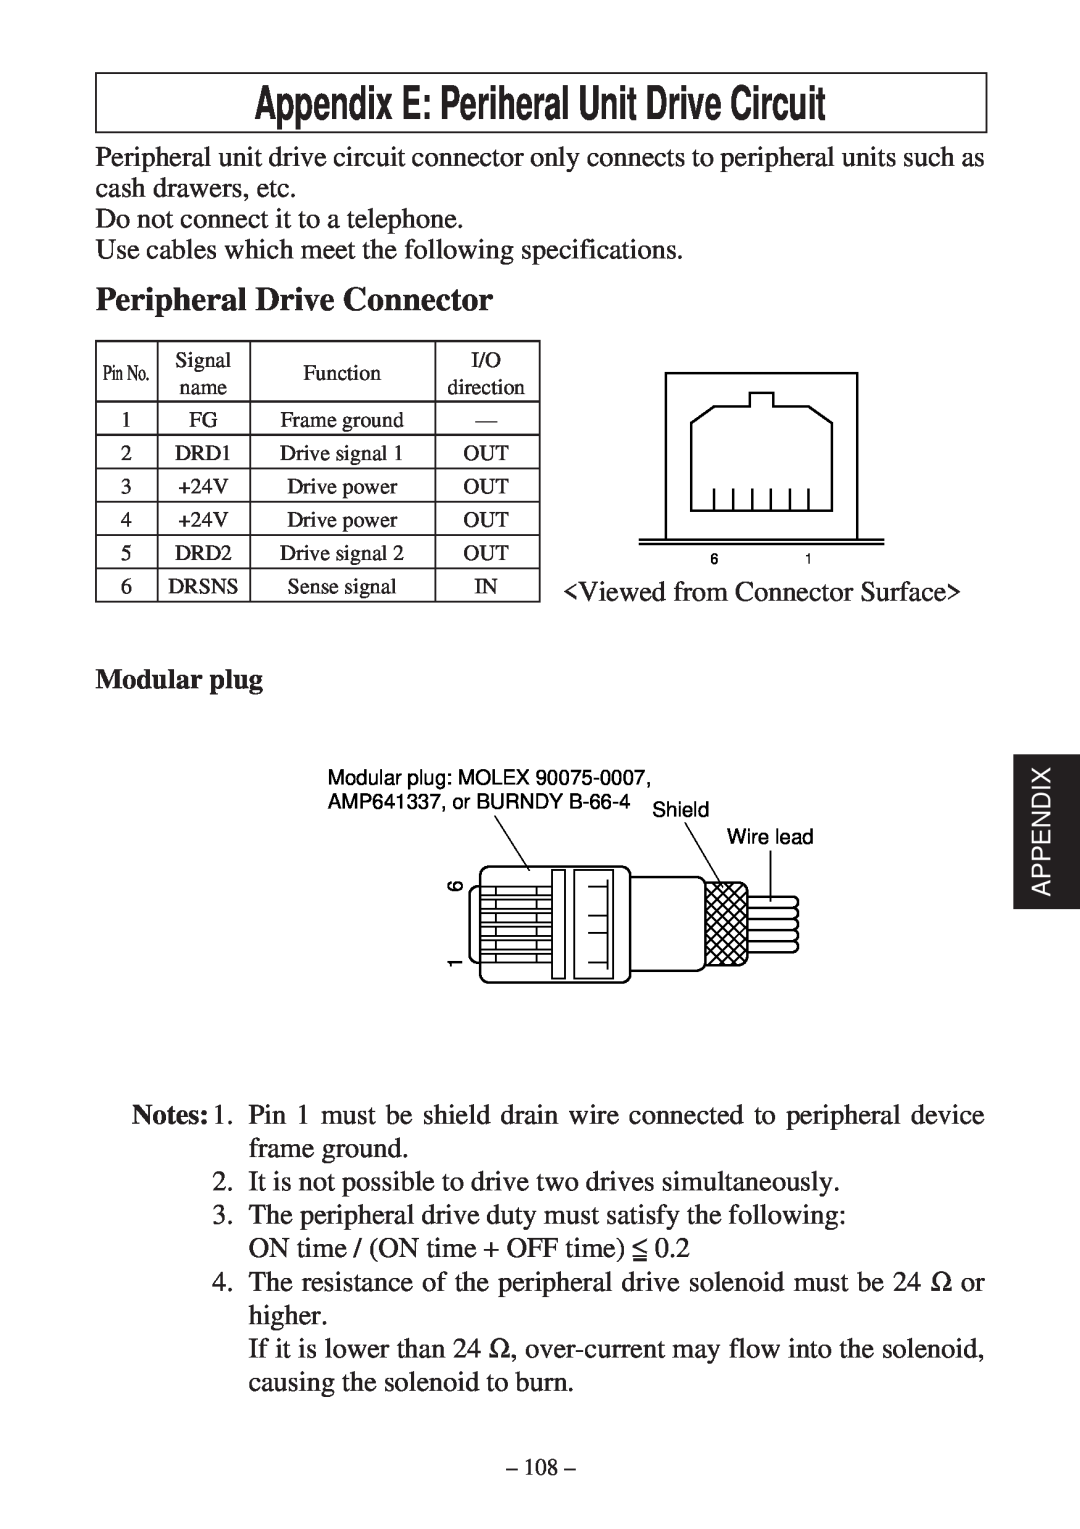 Star Micronics TSP600 user manual Appendix E Periheral Unit Drive Circuit, Peripheral Drive Connector, Modular plug 